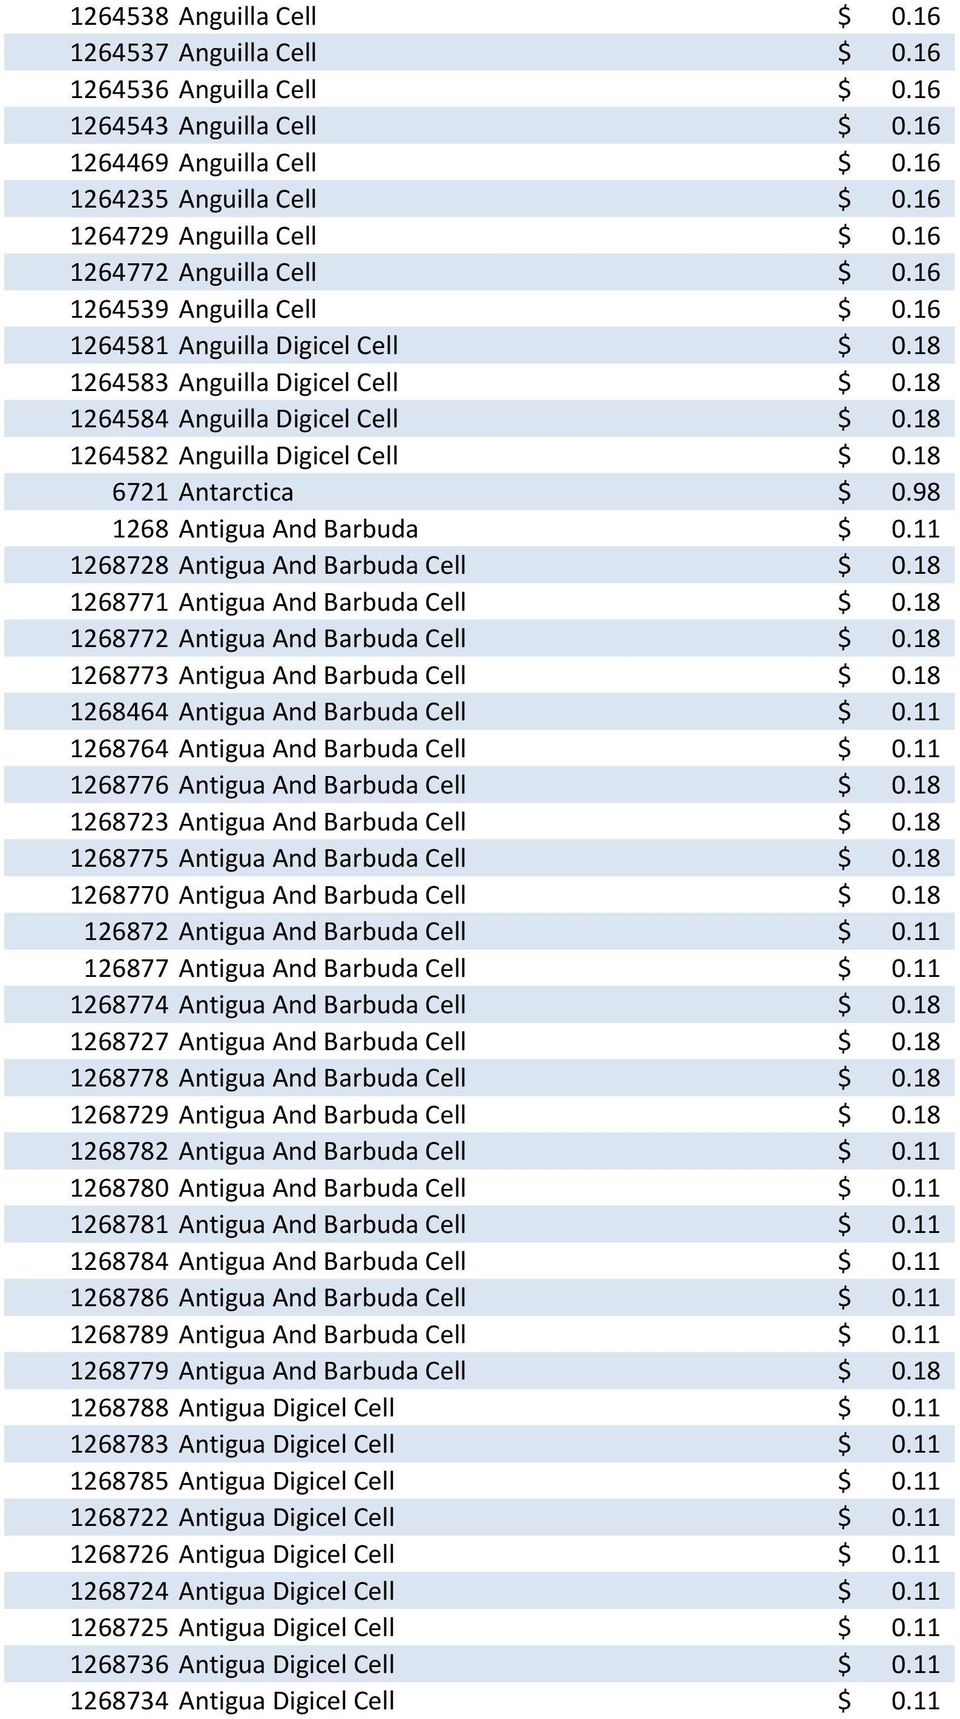 18 1264582 Anguilla Digicel Cell $ 0.18 6721 Antarctica $ 0.98 1268 Antigua And Barbuda $ 0.11 1268728 Antigua And Barbuda Cell $ 0.18 1268771 Antigua And Barbuda Cell $ 0.